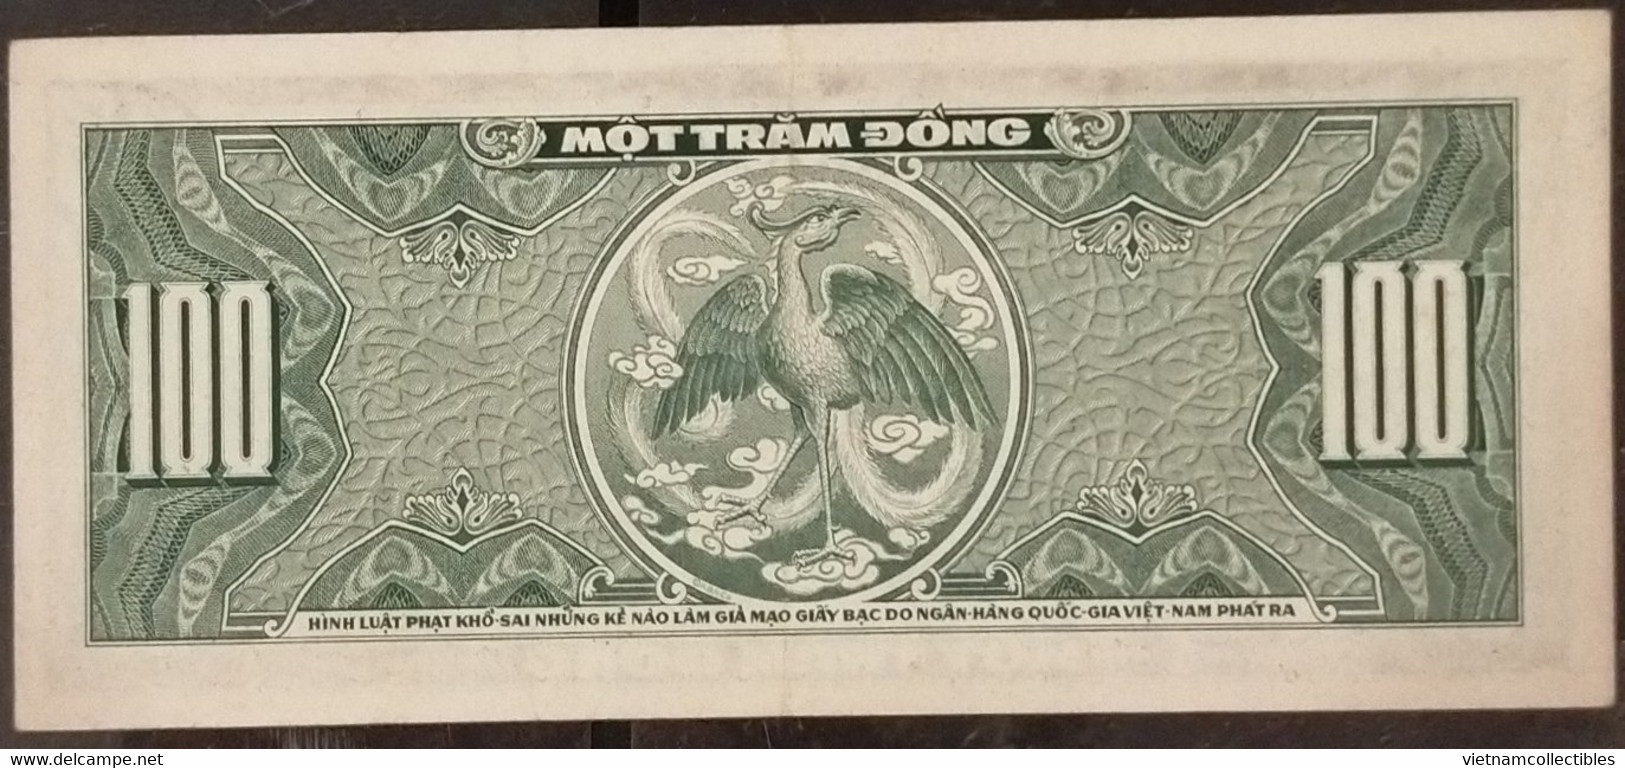 South Viet Nam Vietnam 100 Dong EF Banknote Note 1955 - Pick #  8 / 02 Photos - Vietnam